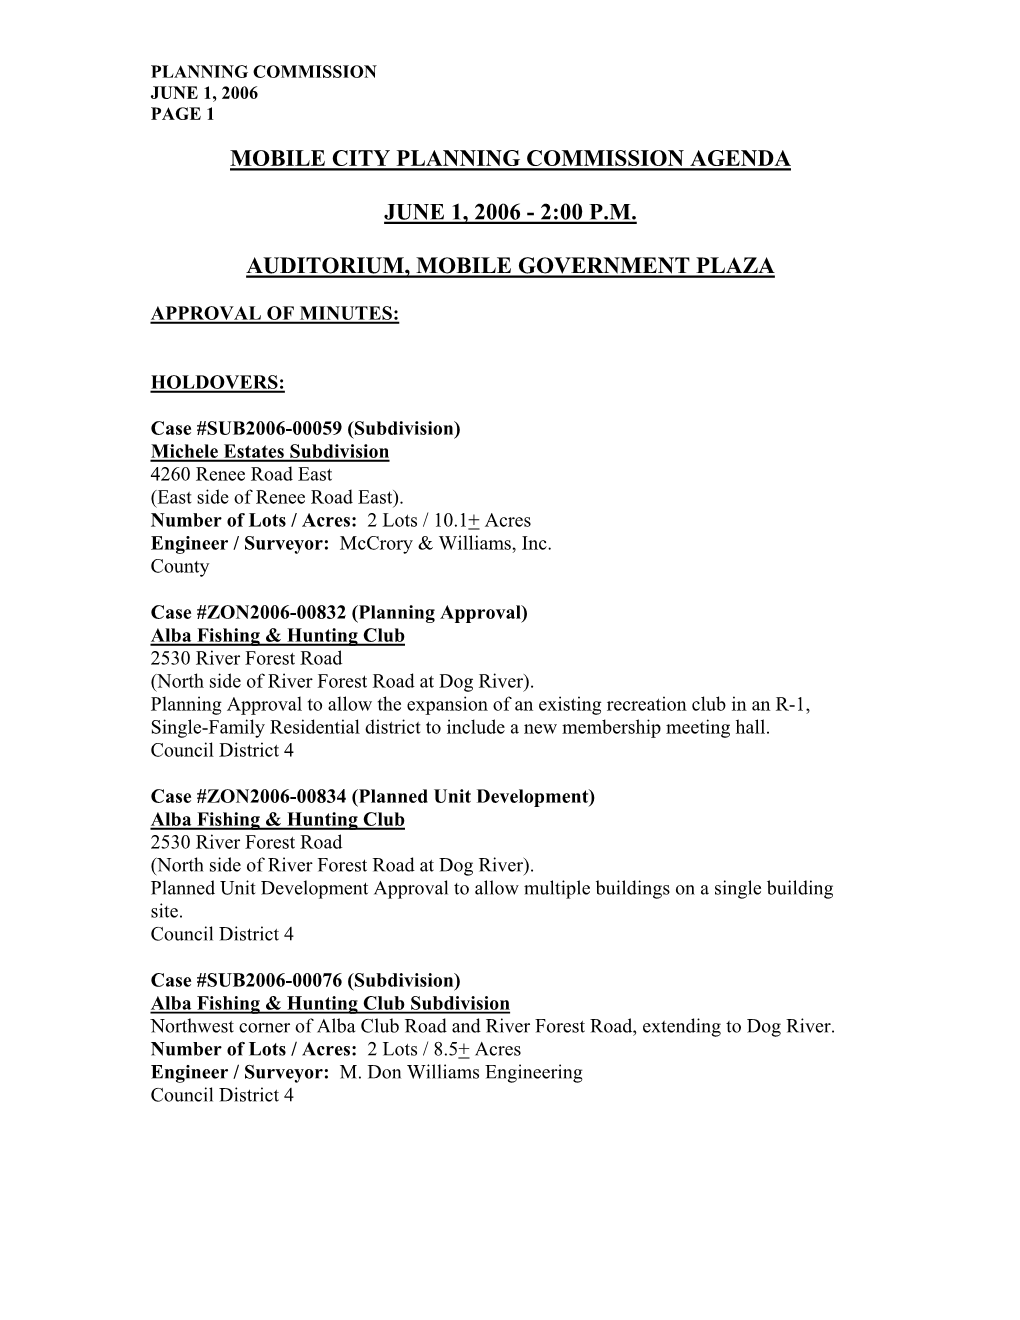 Mobile City Planning Commission Agenda June 1, 2006